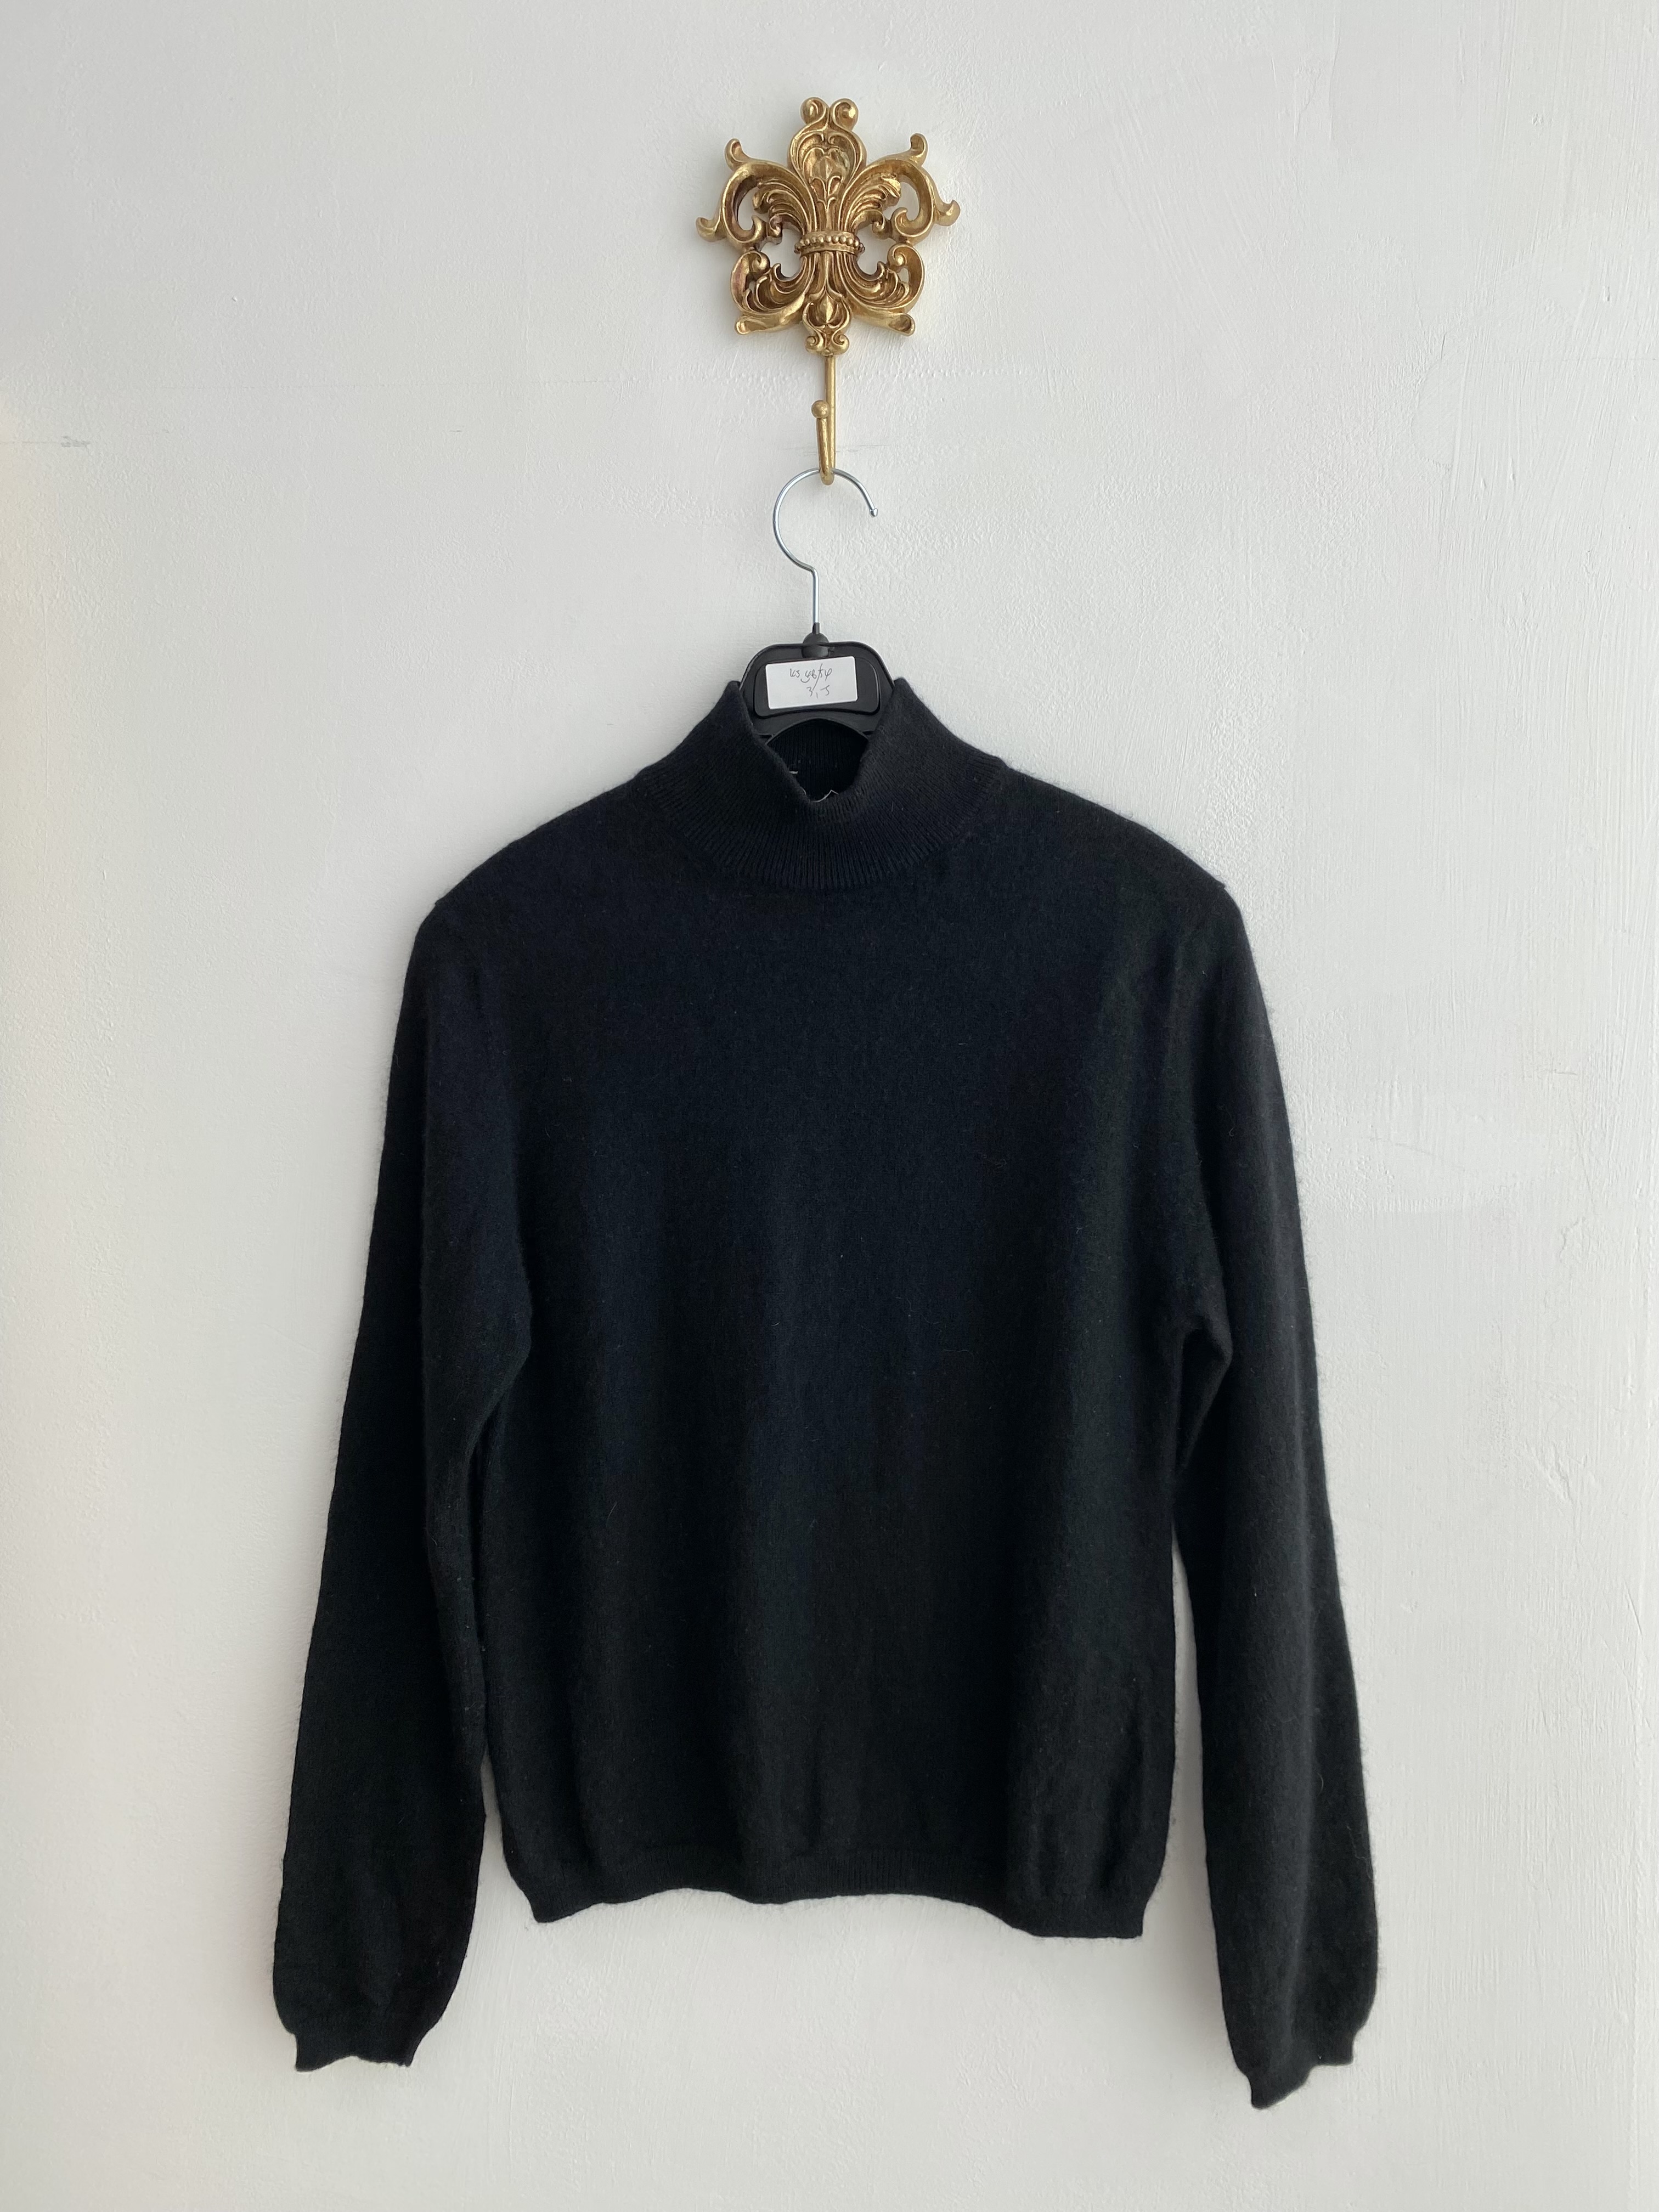 Black cashmere middle neck knit